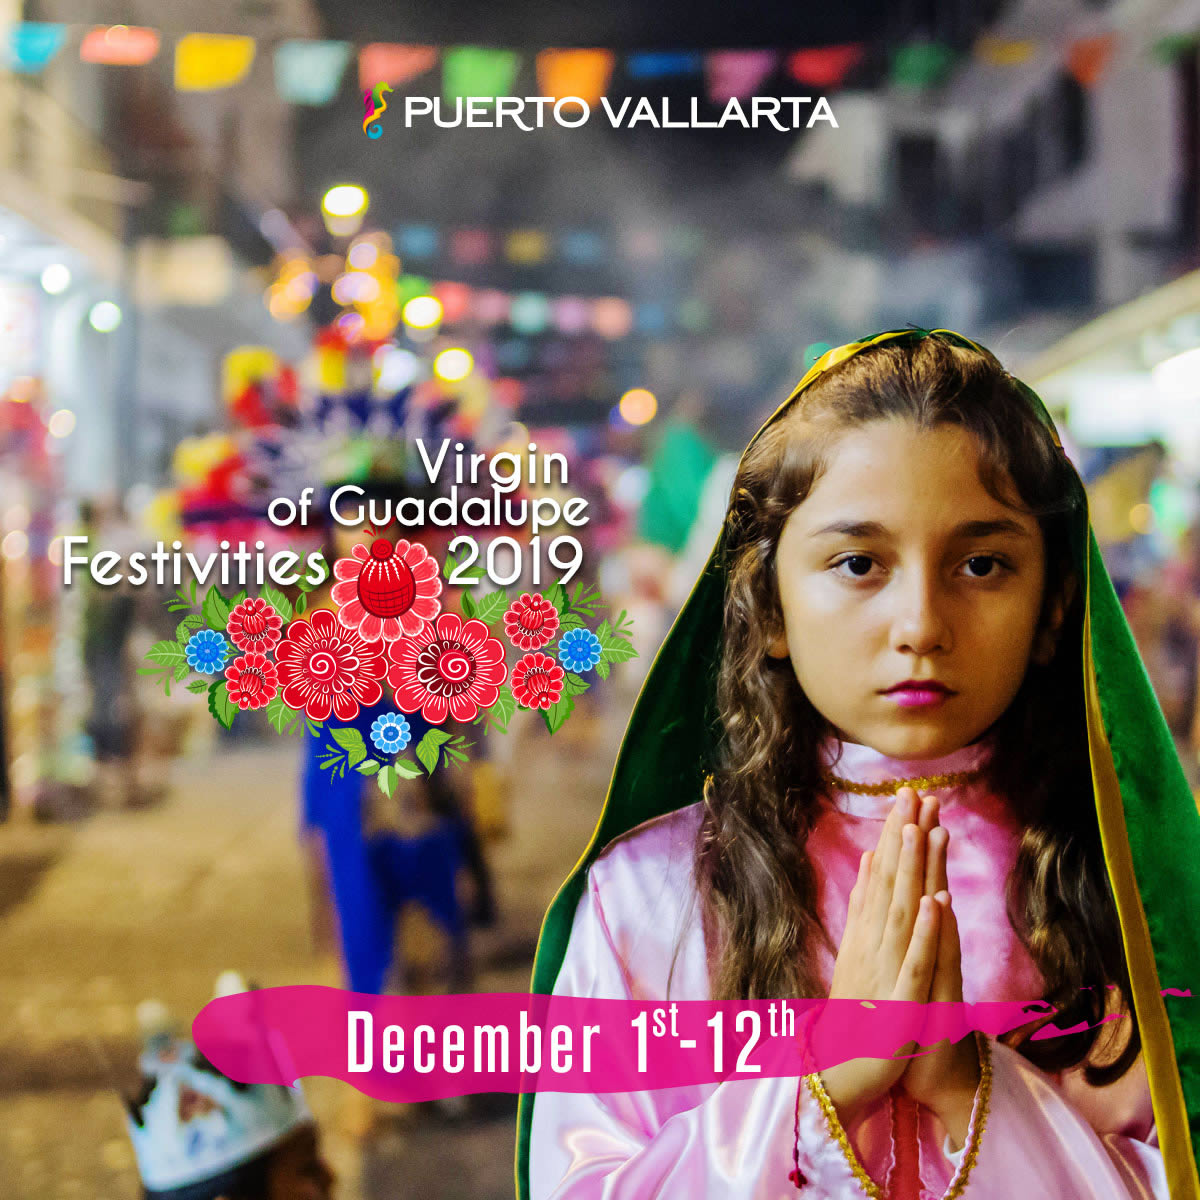 Virgin of Guadalupe Festivities